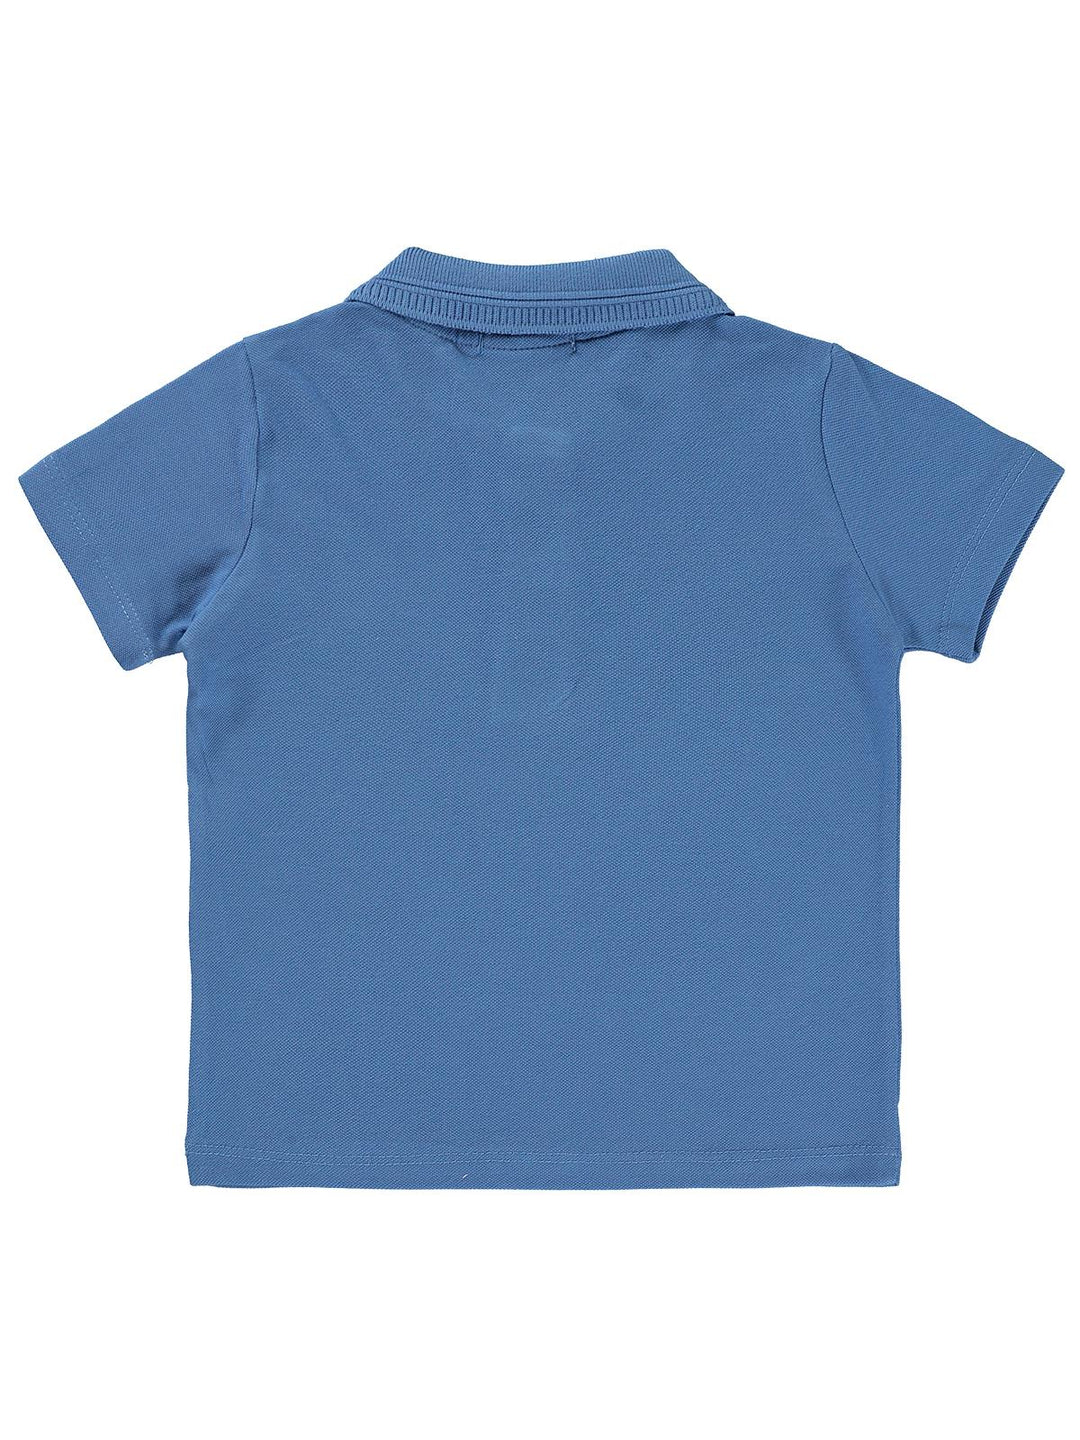 Civil Boys Polo Shirt H/S #3030-2 (S-22)